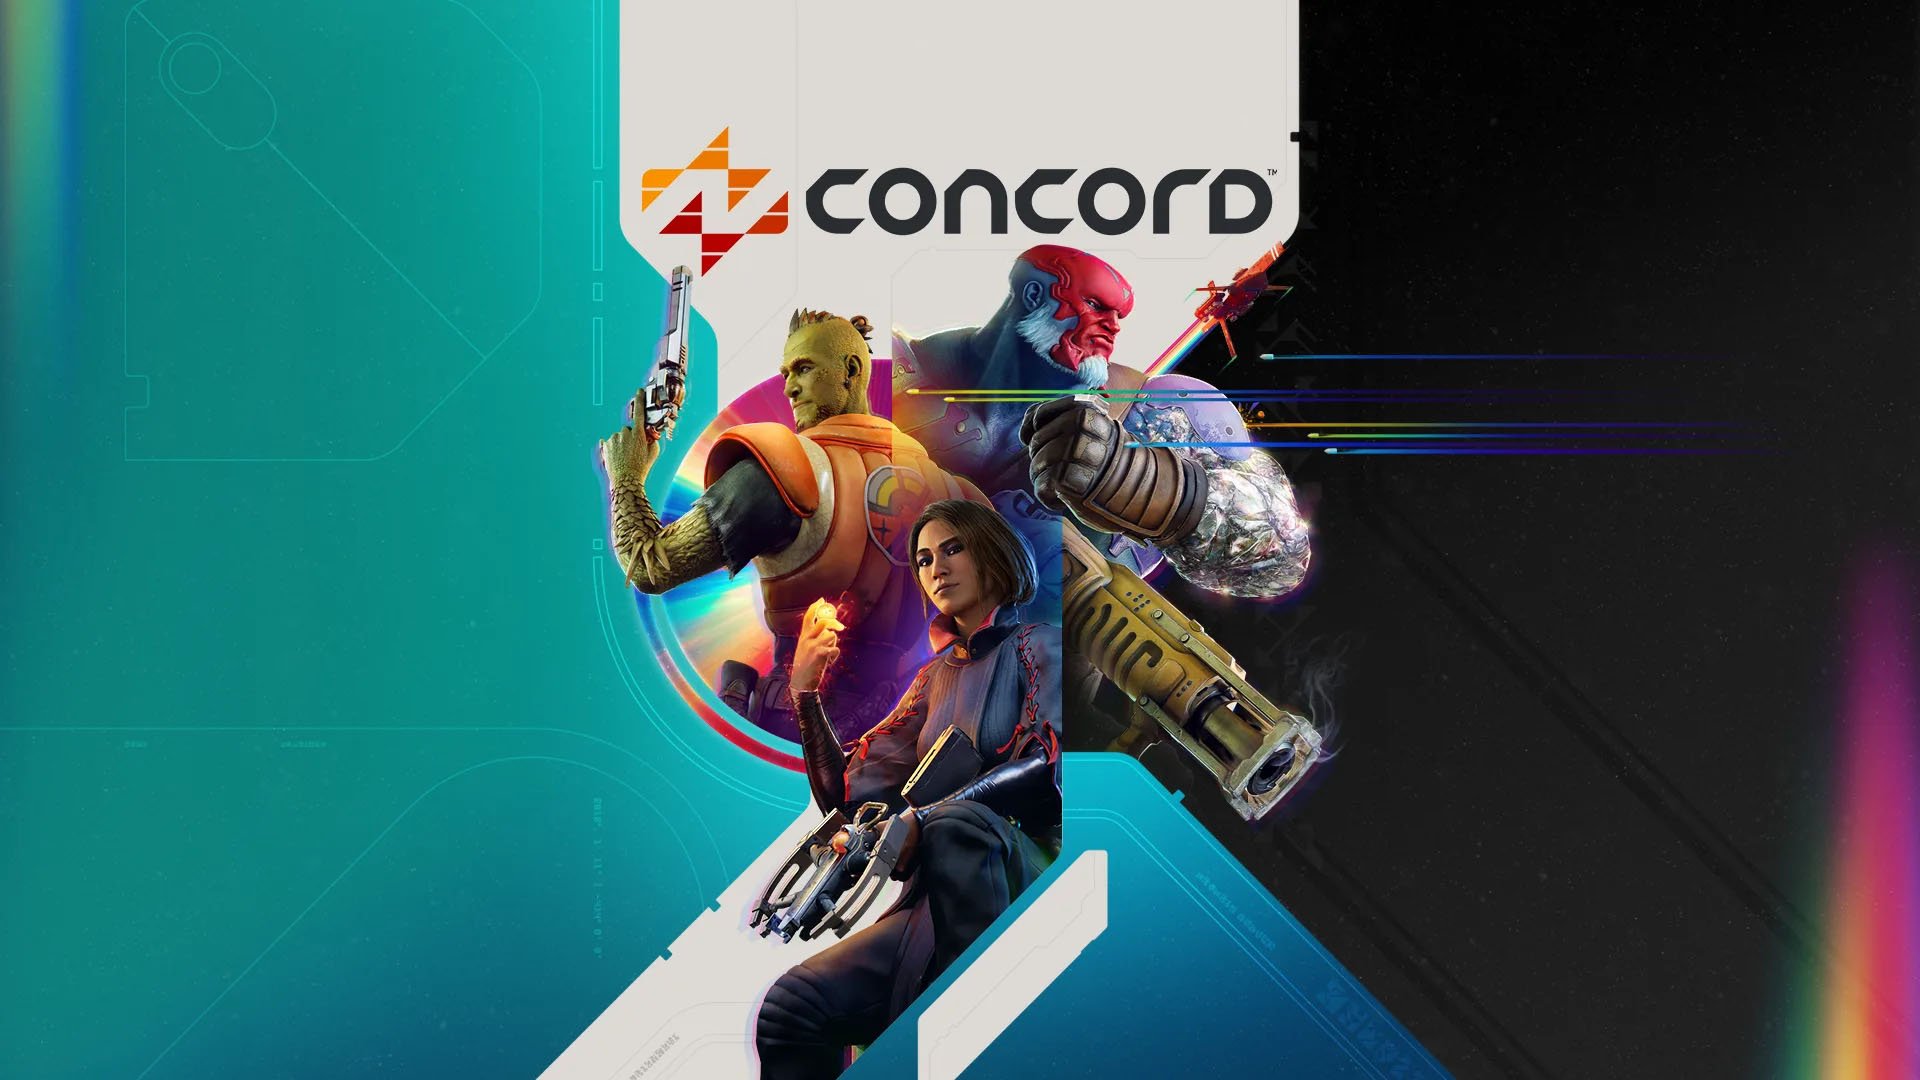 Concord Beta 发布时间公布 - 财经新闻